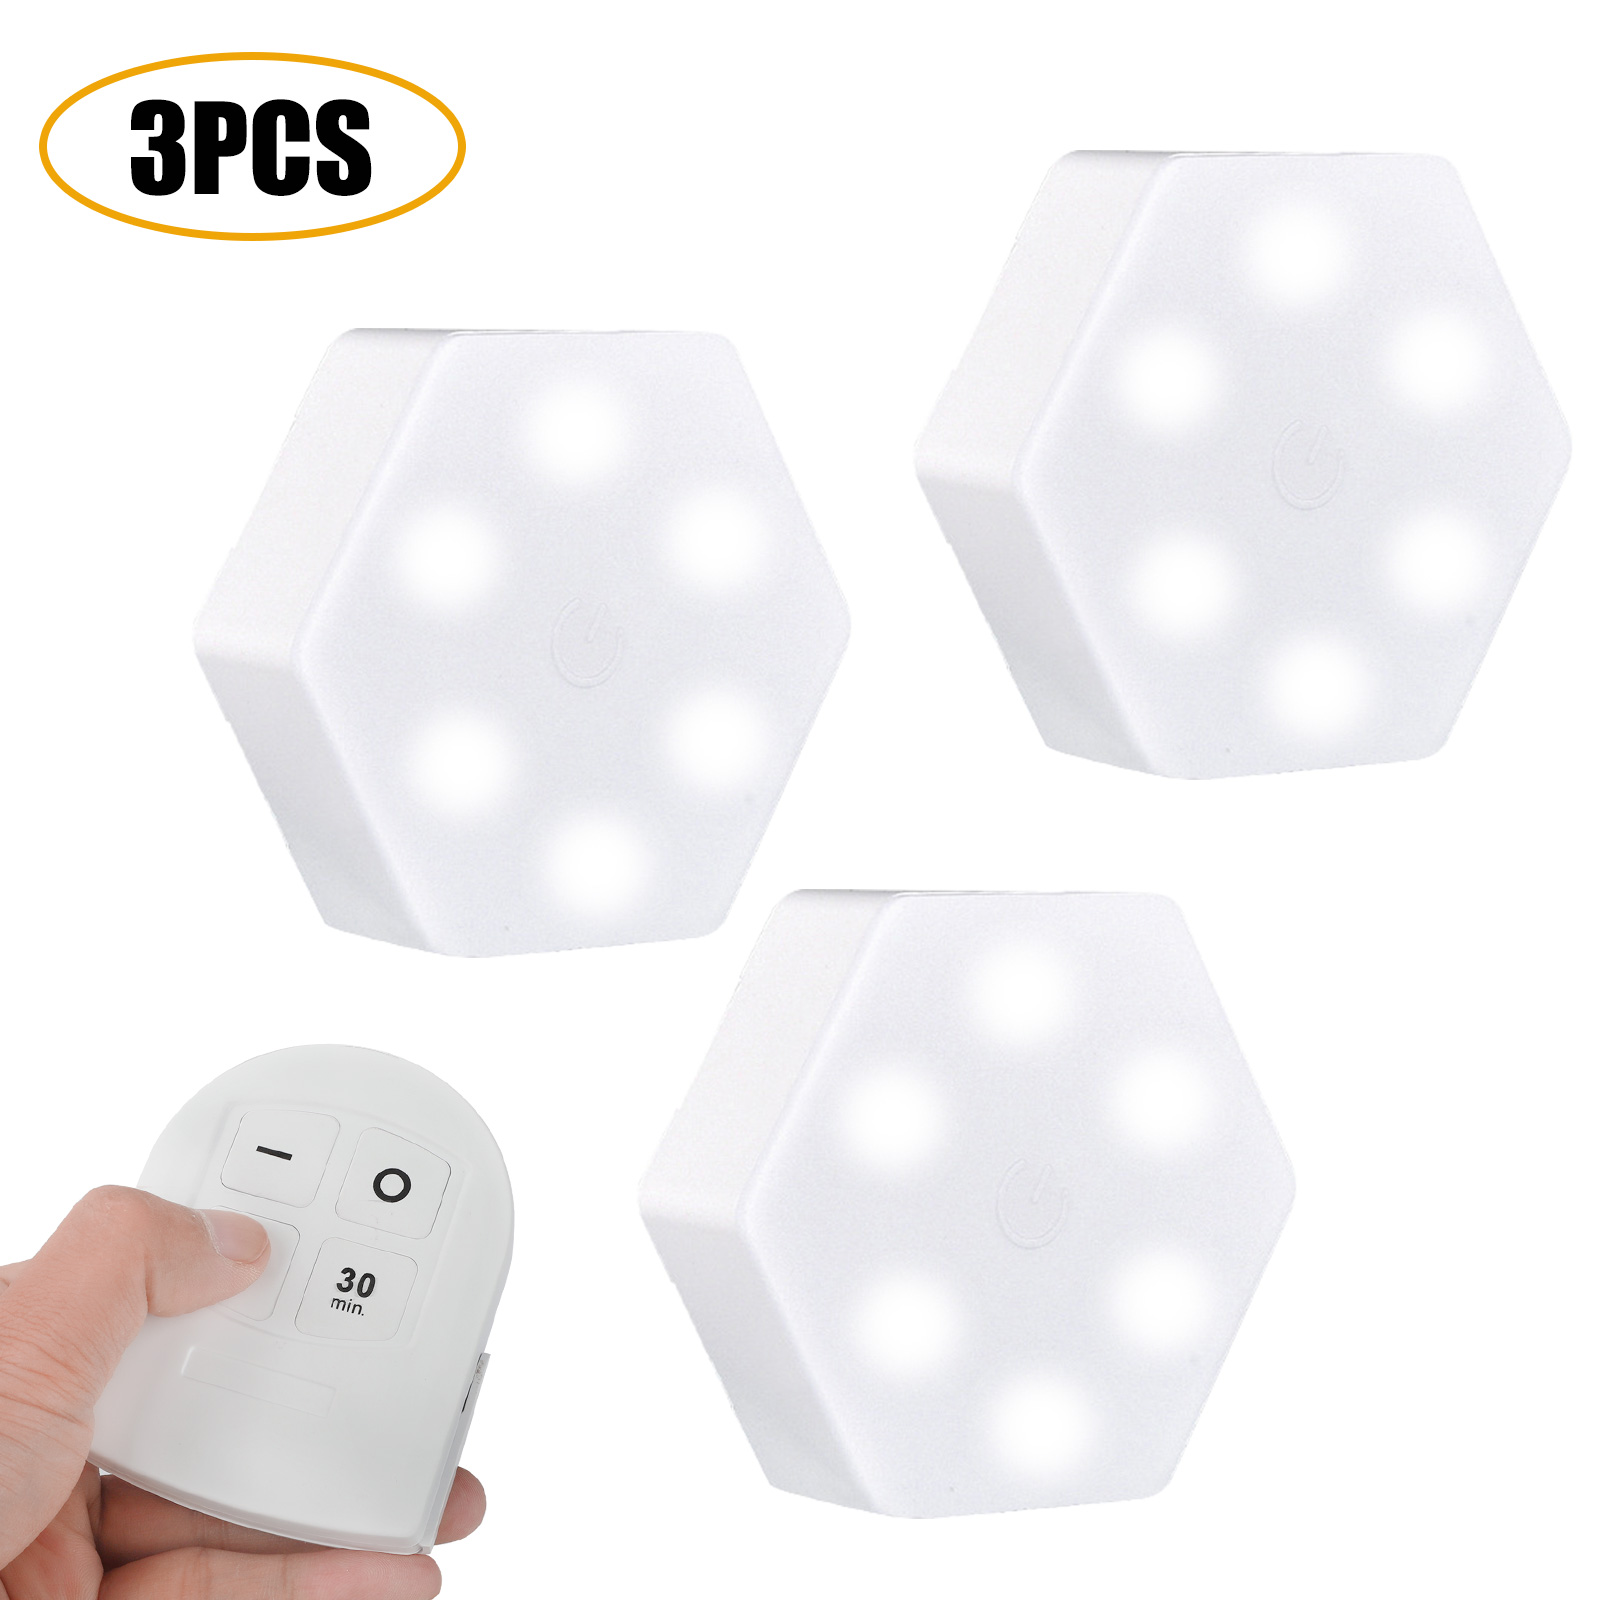 3PCS Wireless Stick On Puck LED Tap Light RC Under Cabinet Closet Night Light 